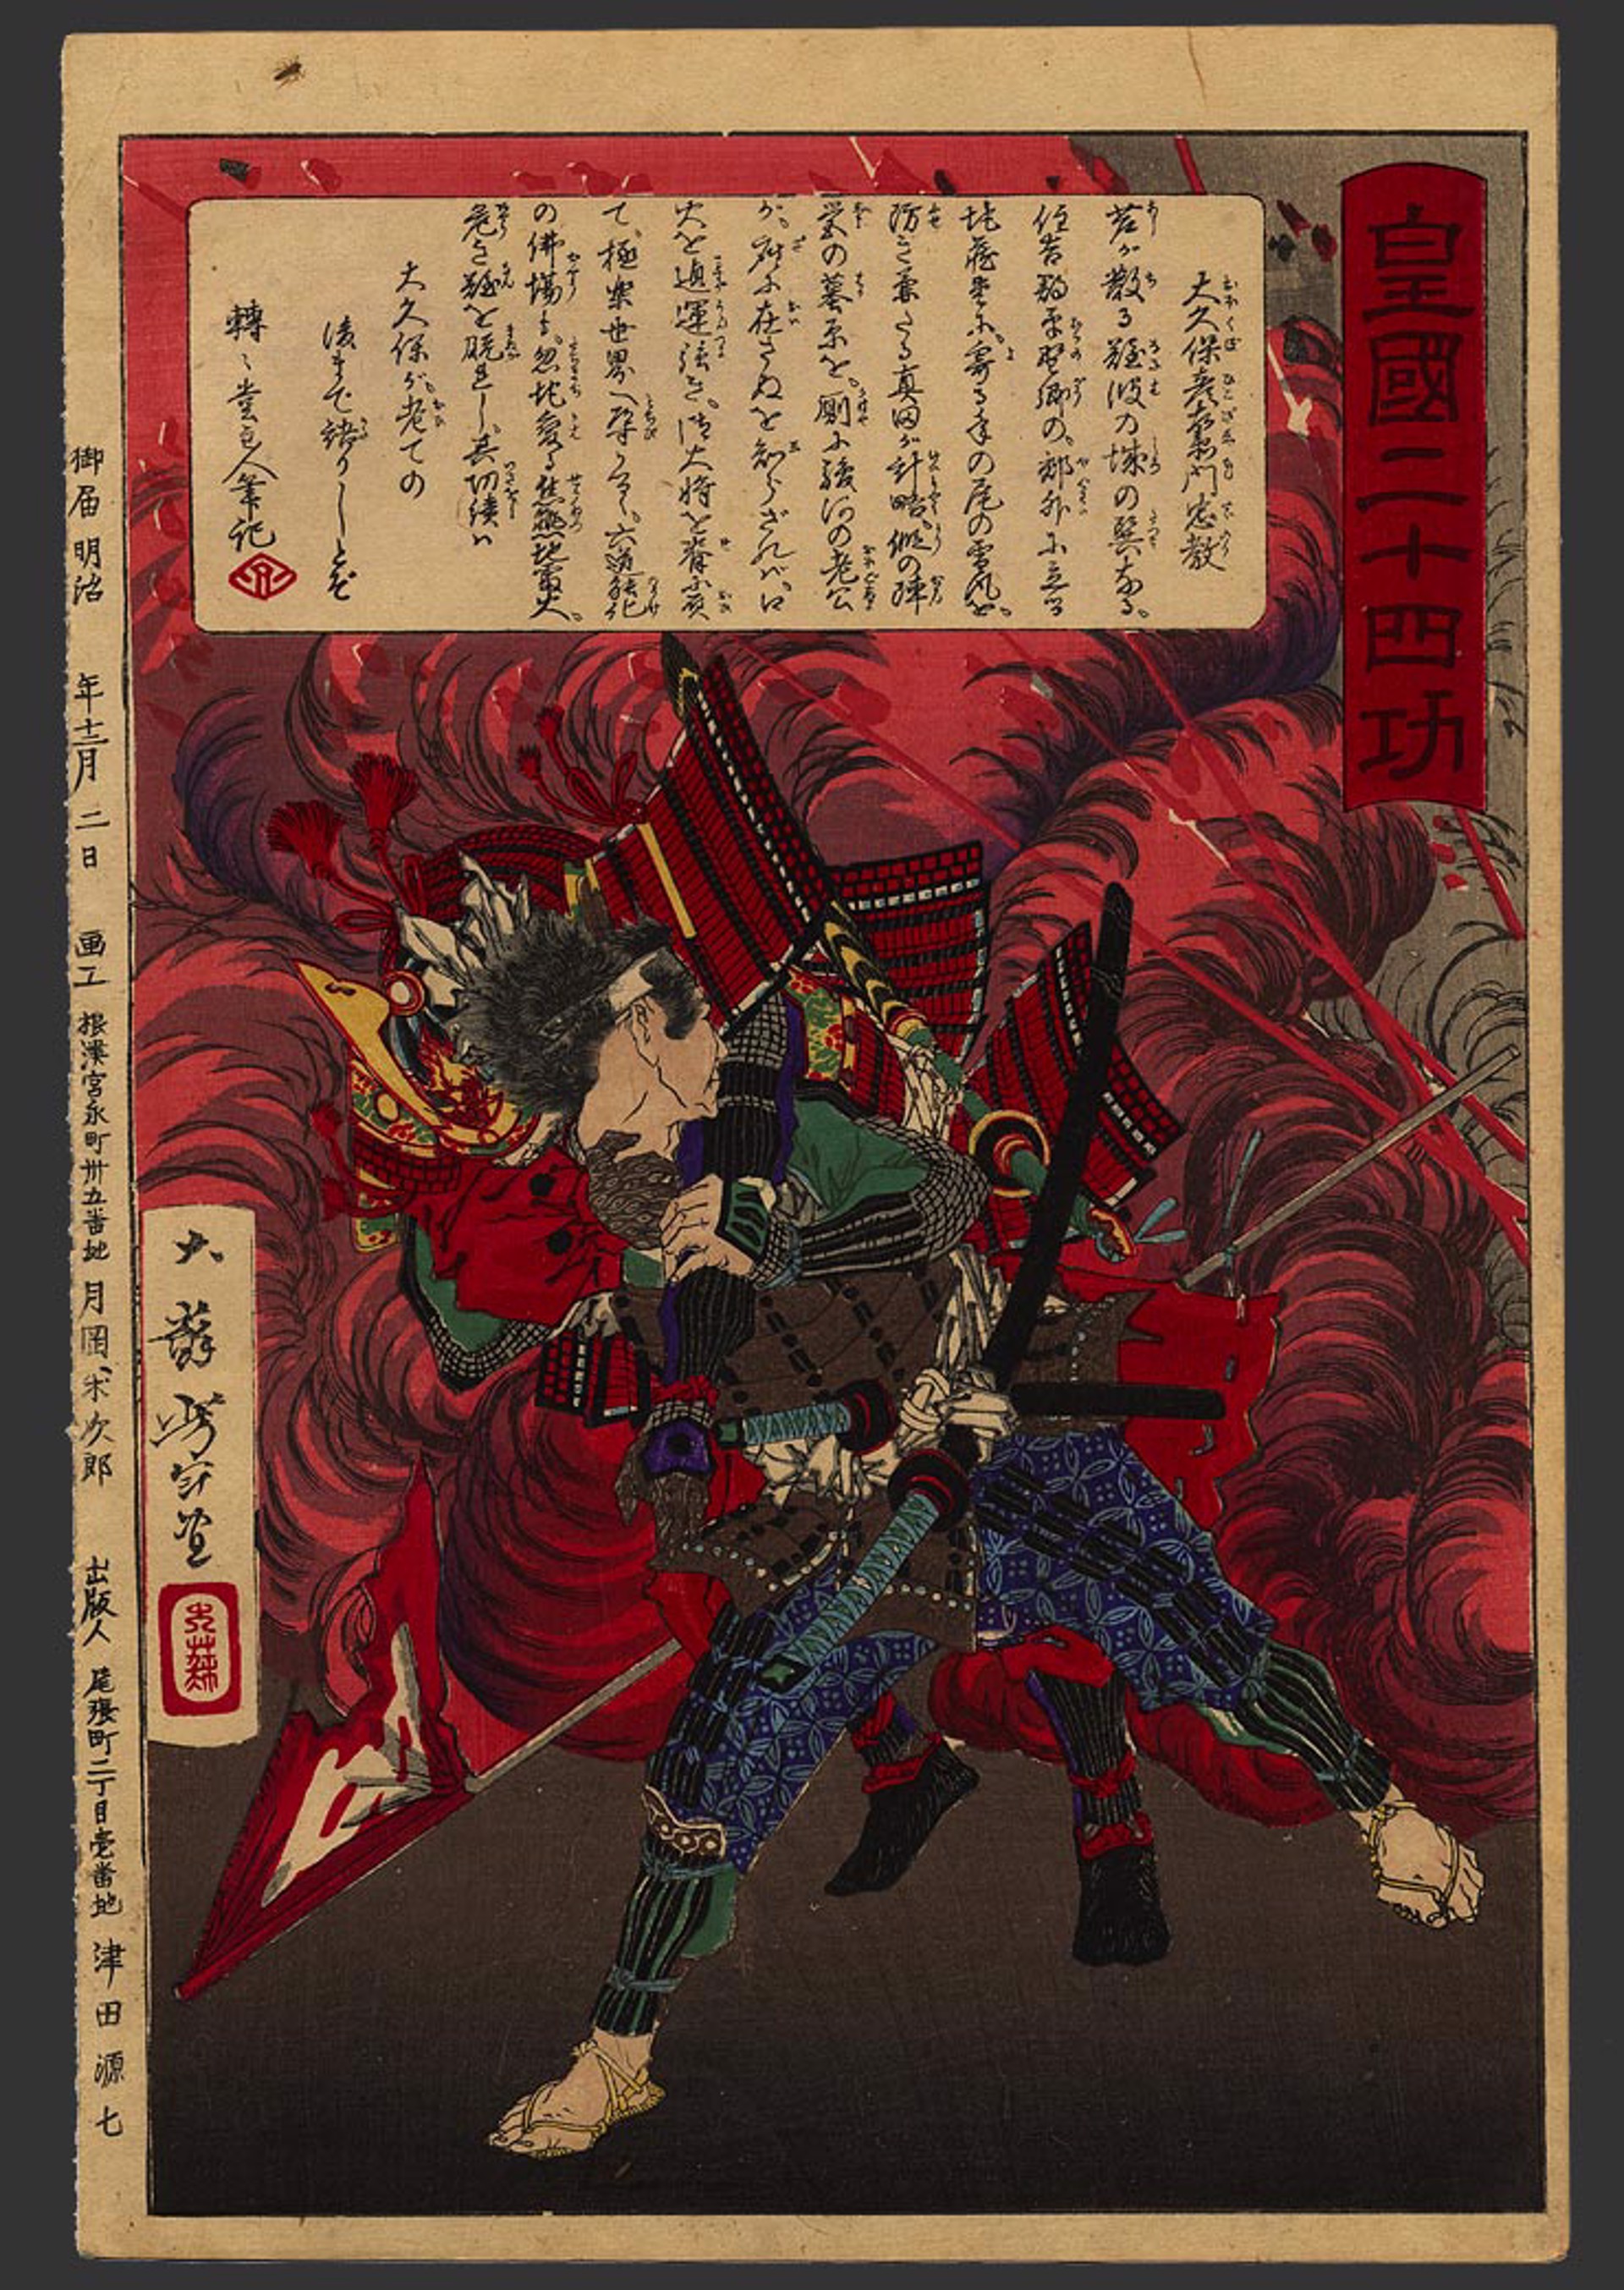 #13 Okubo (hikozaemon) Tadanori rescuing Tokugawa Ieyasu on the battlefield. 24 Accomplishments in Imperial Japan by Yoshitoshi